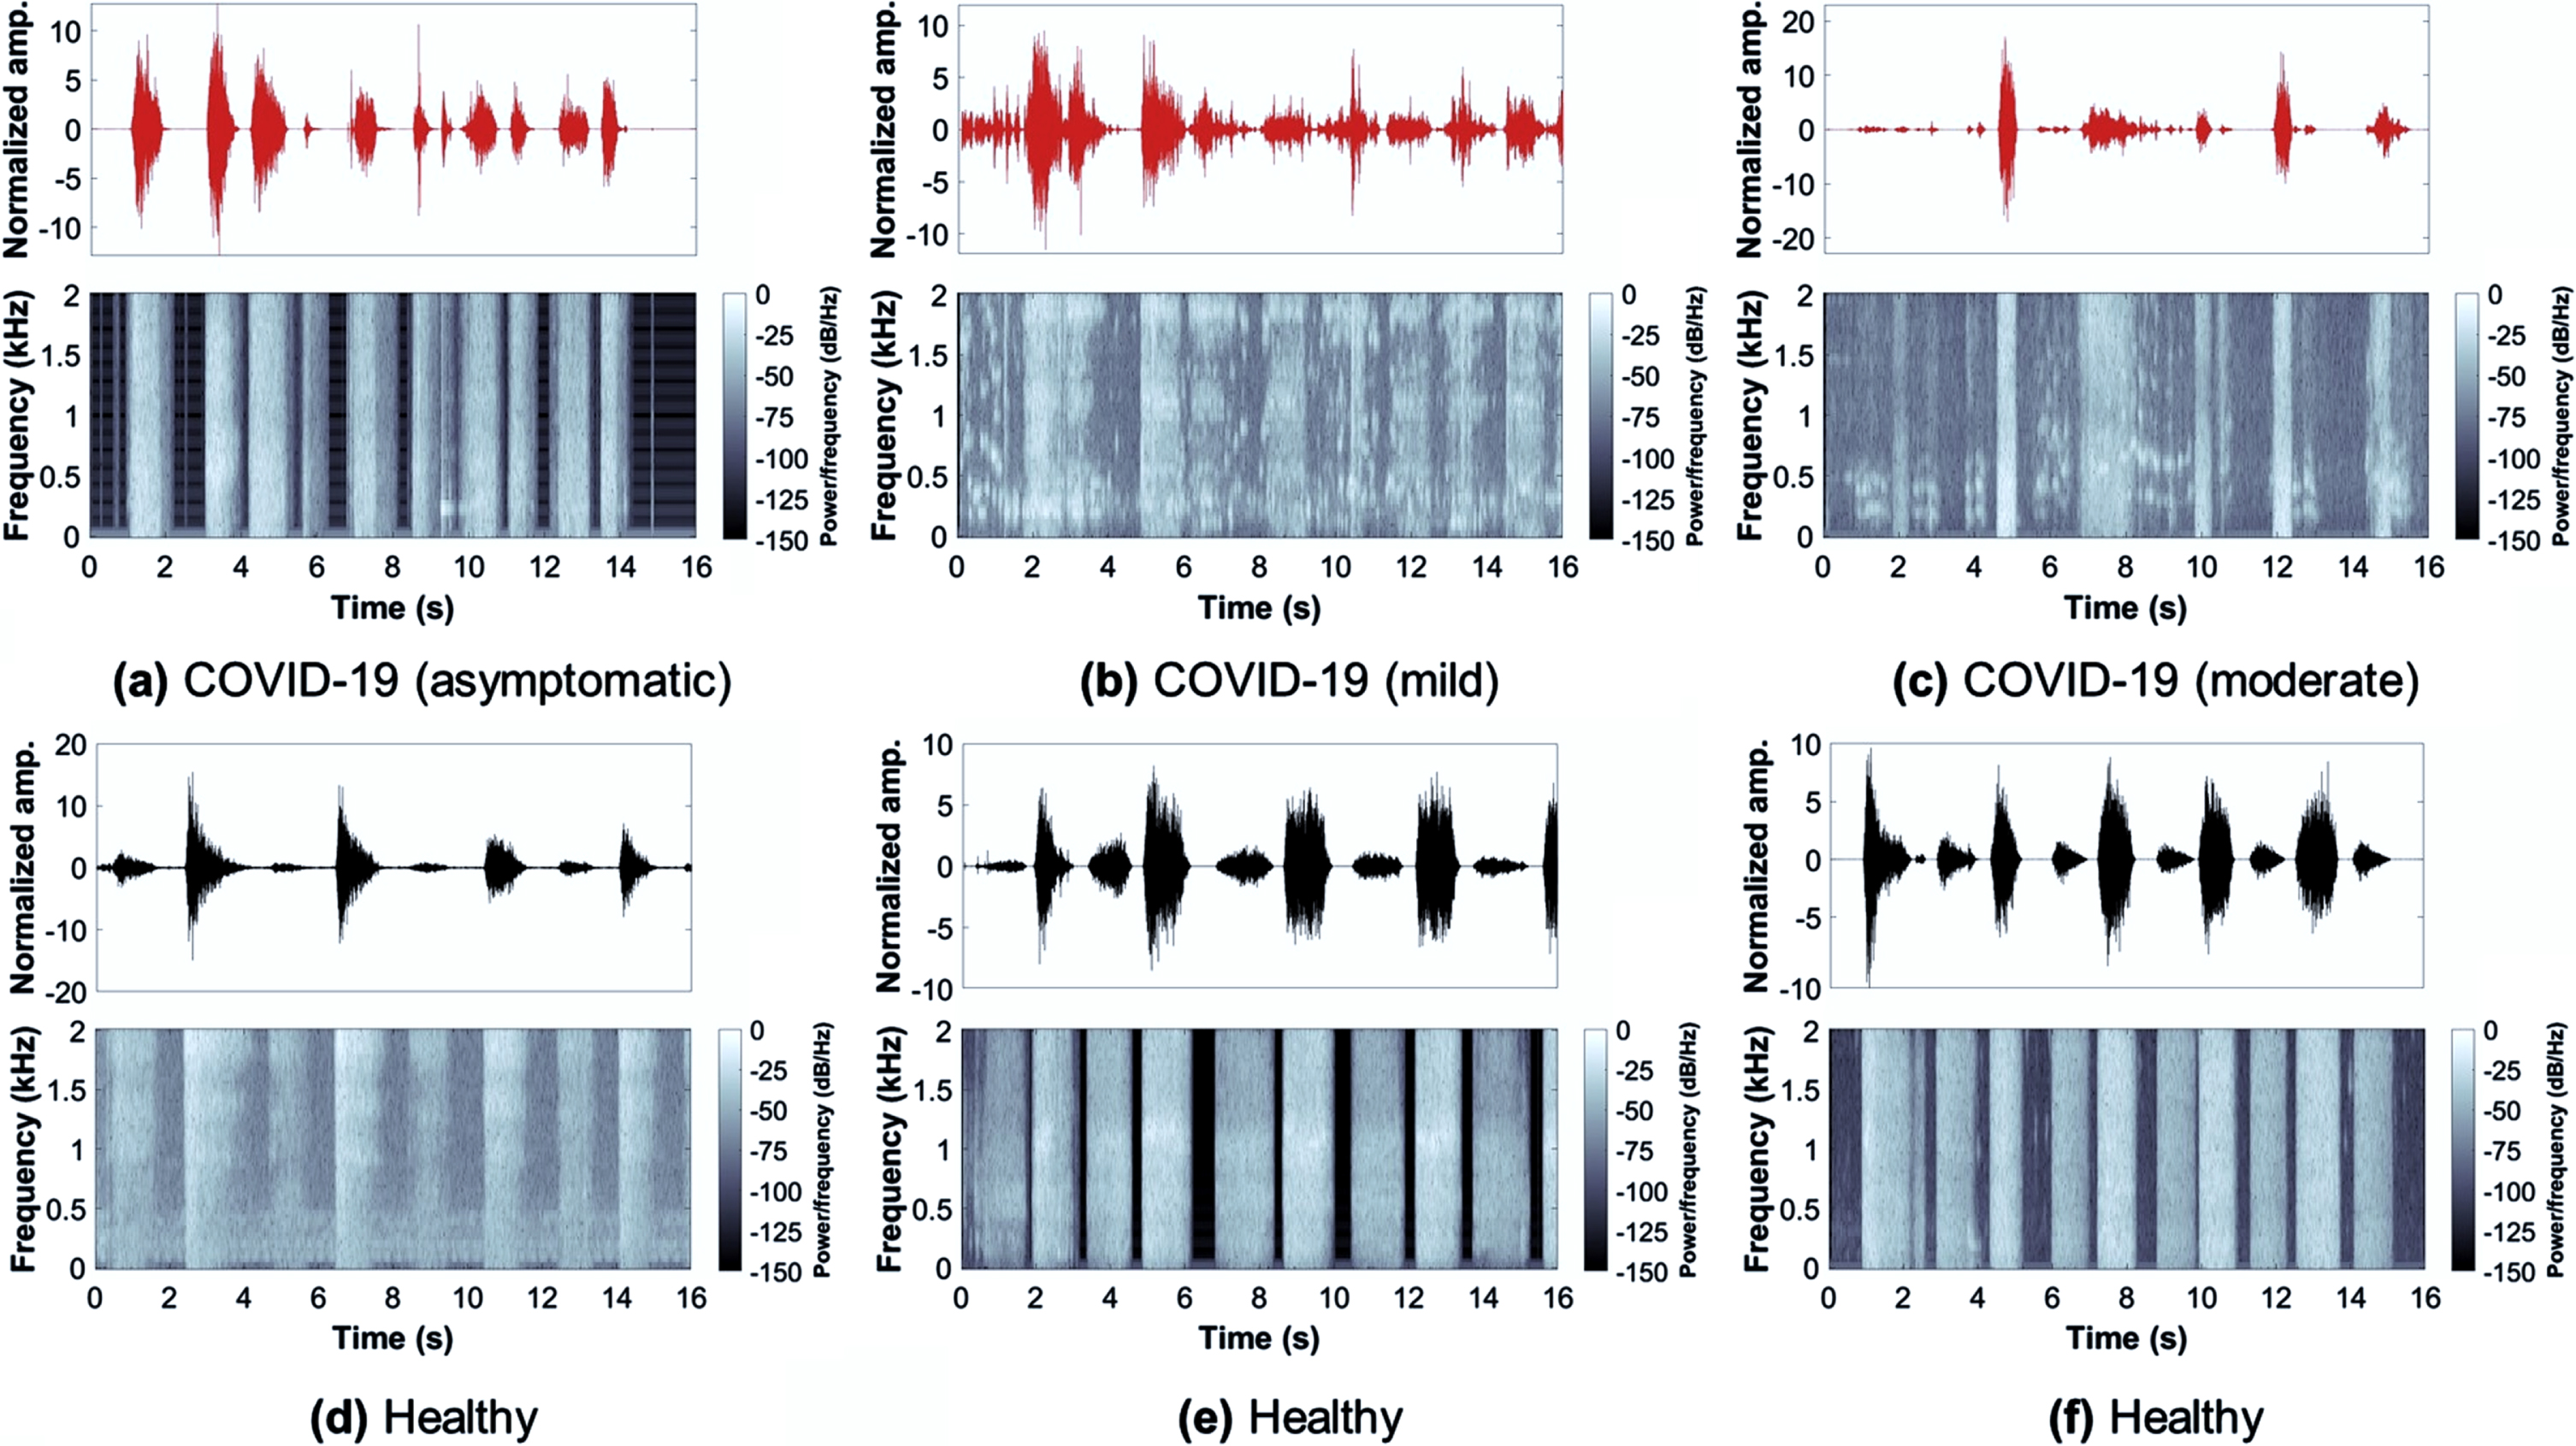 Corresponding spectrograms detect breathing sounds form the real-time virus database.